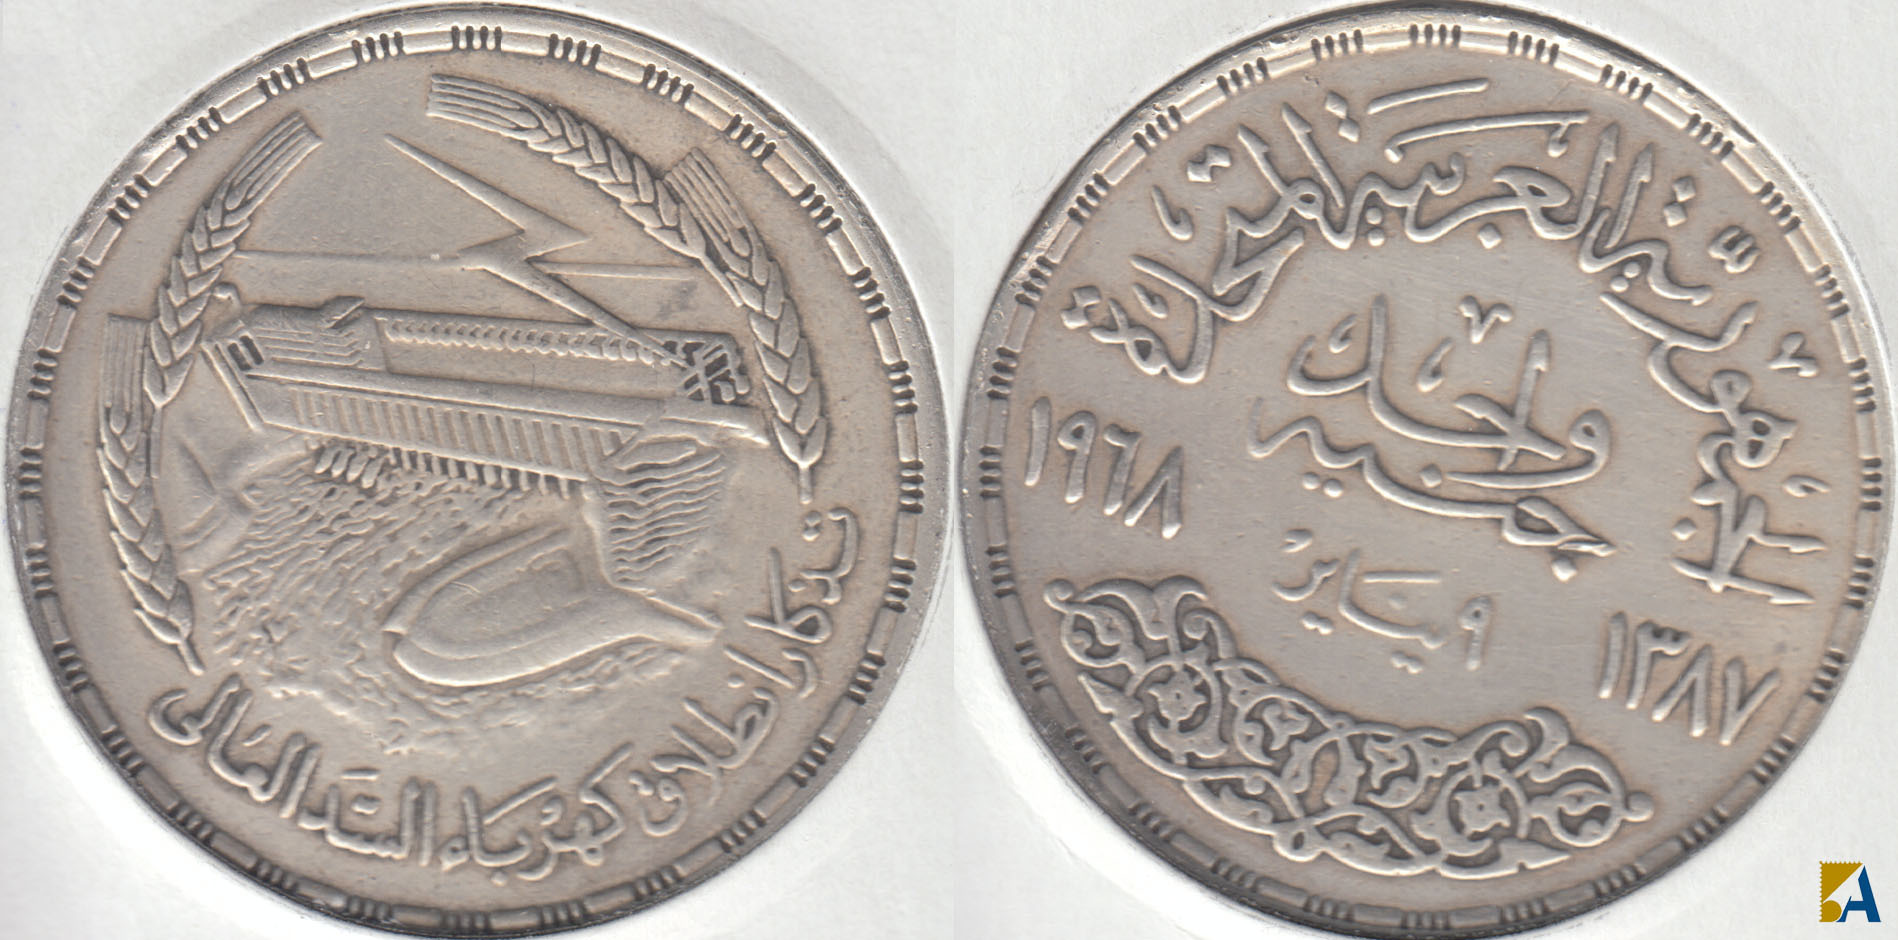 EGIPTO - EGYPT. 1 LIBRA (POUND) DE 1968. PLATA 0.720. (2)